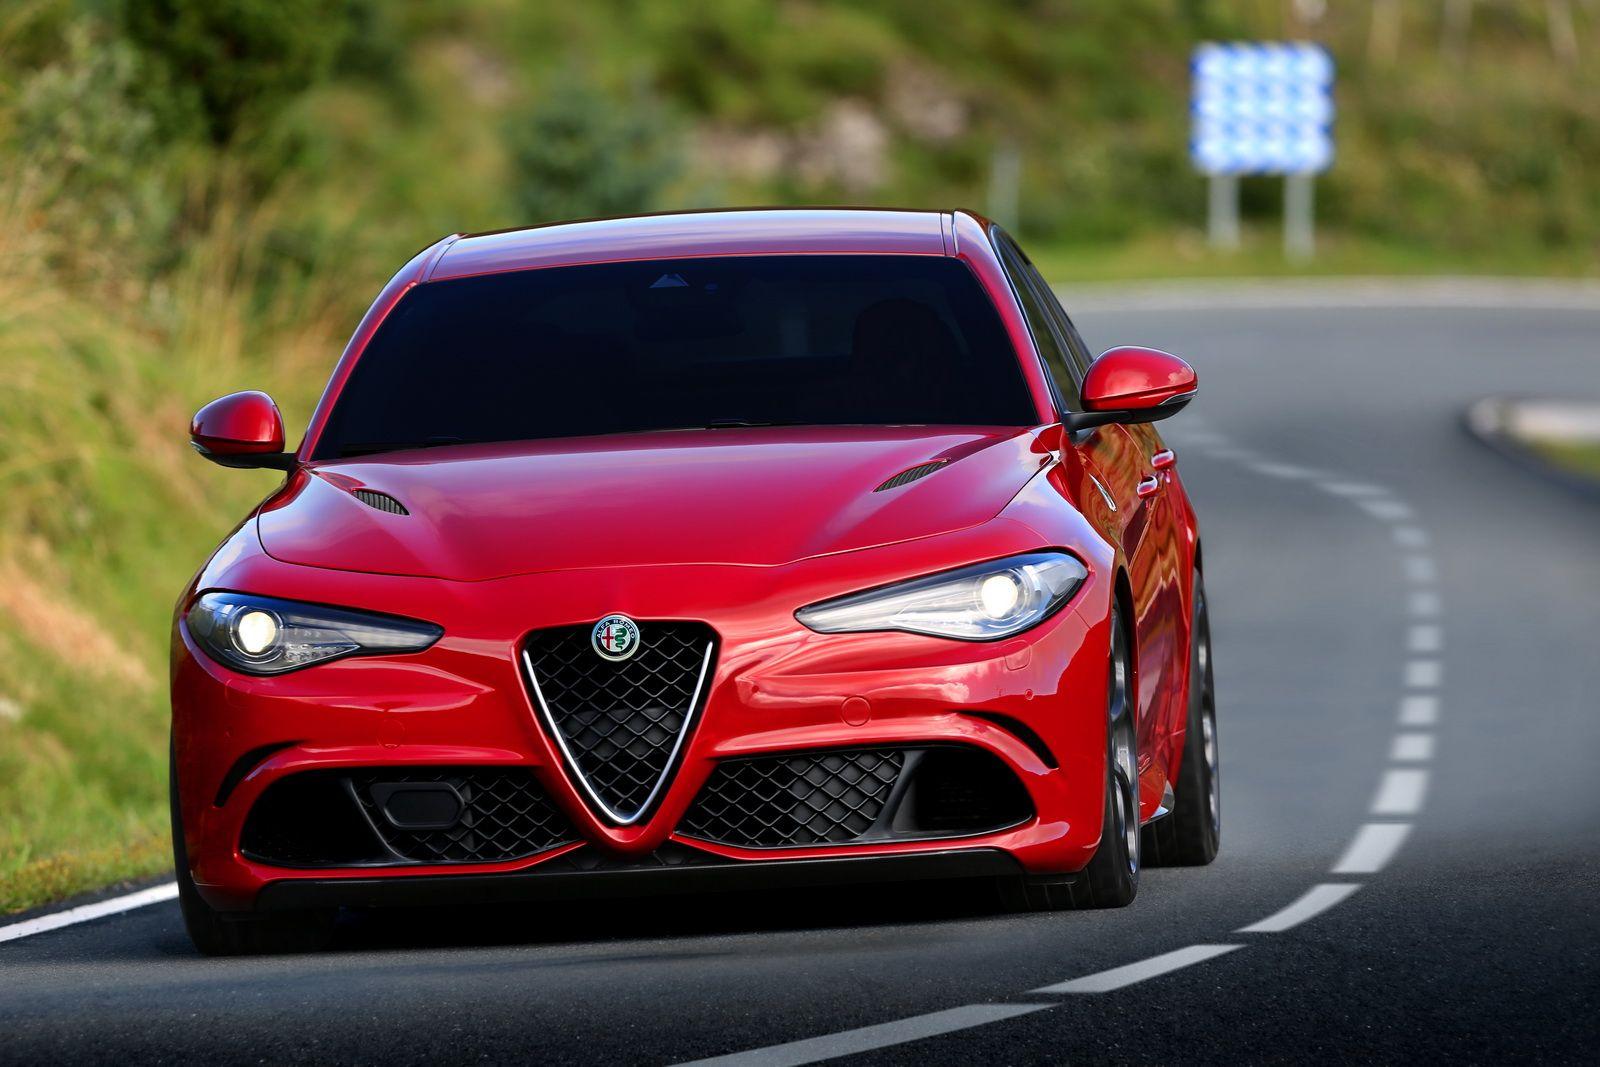 Alfa Romeo Giulia 2015 HD wallpaper free download